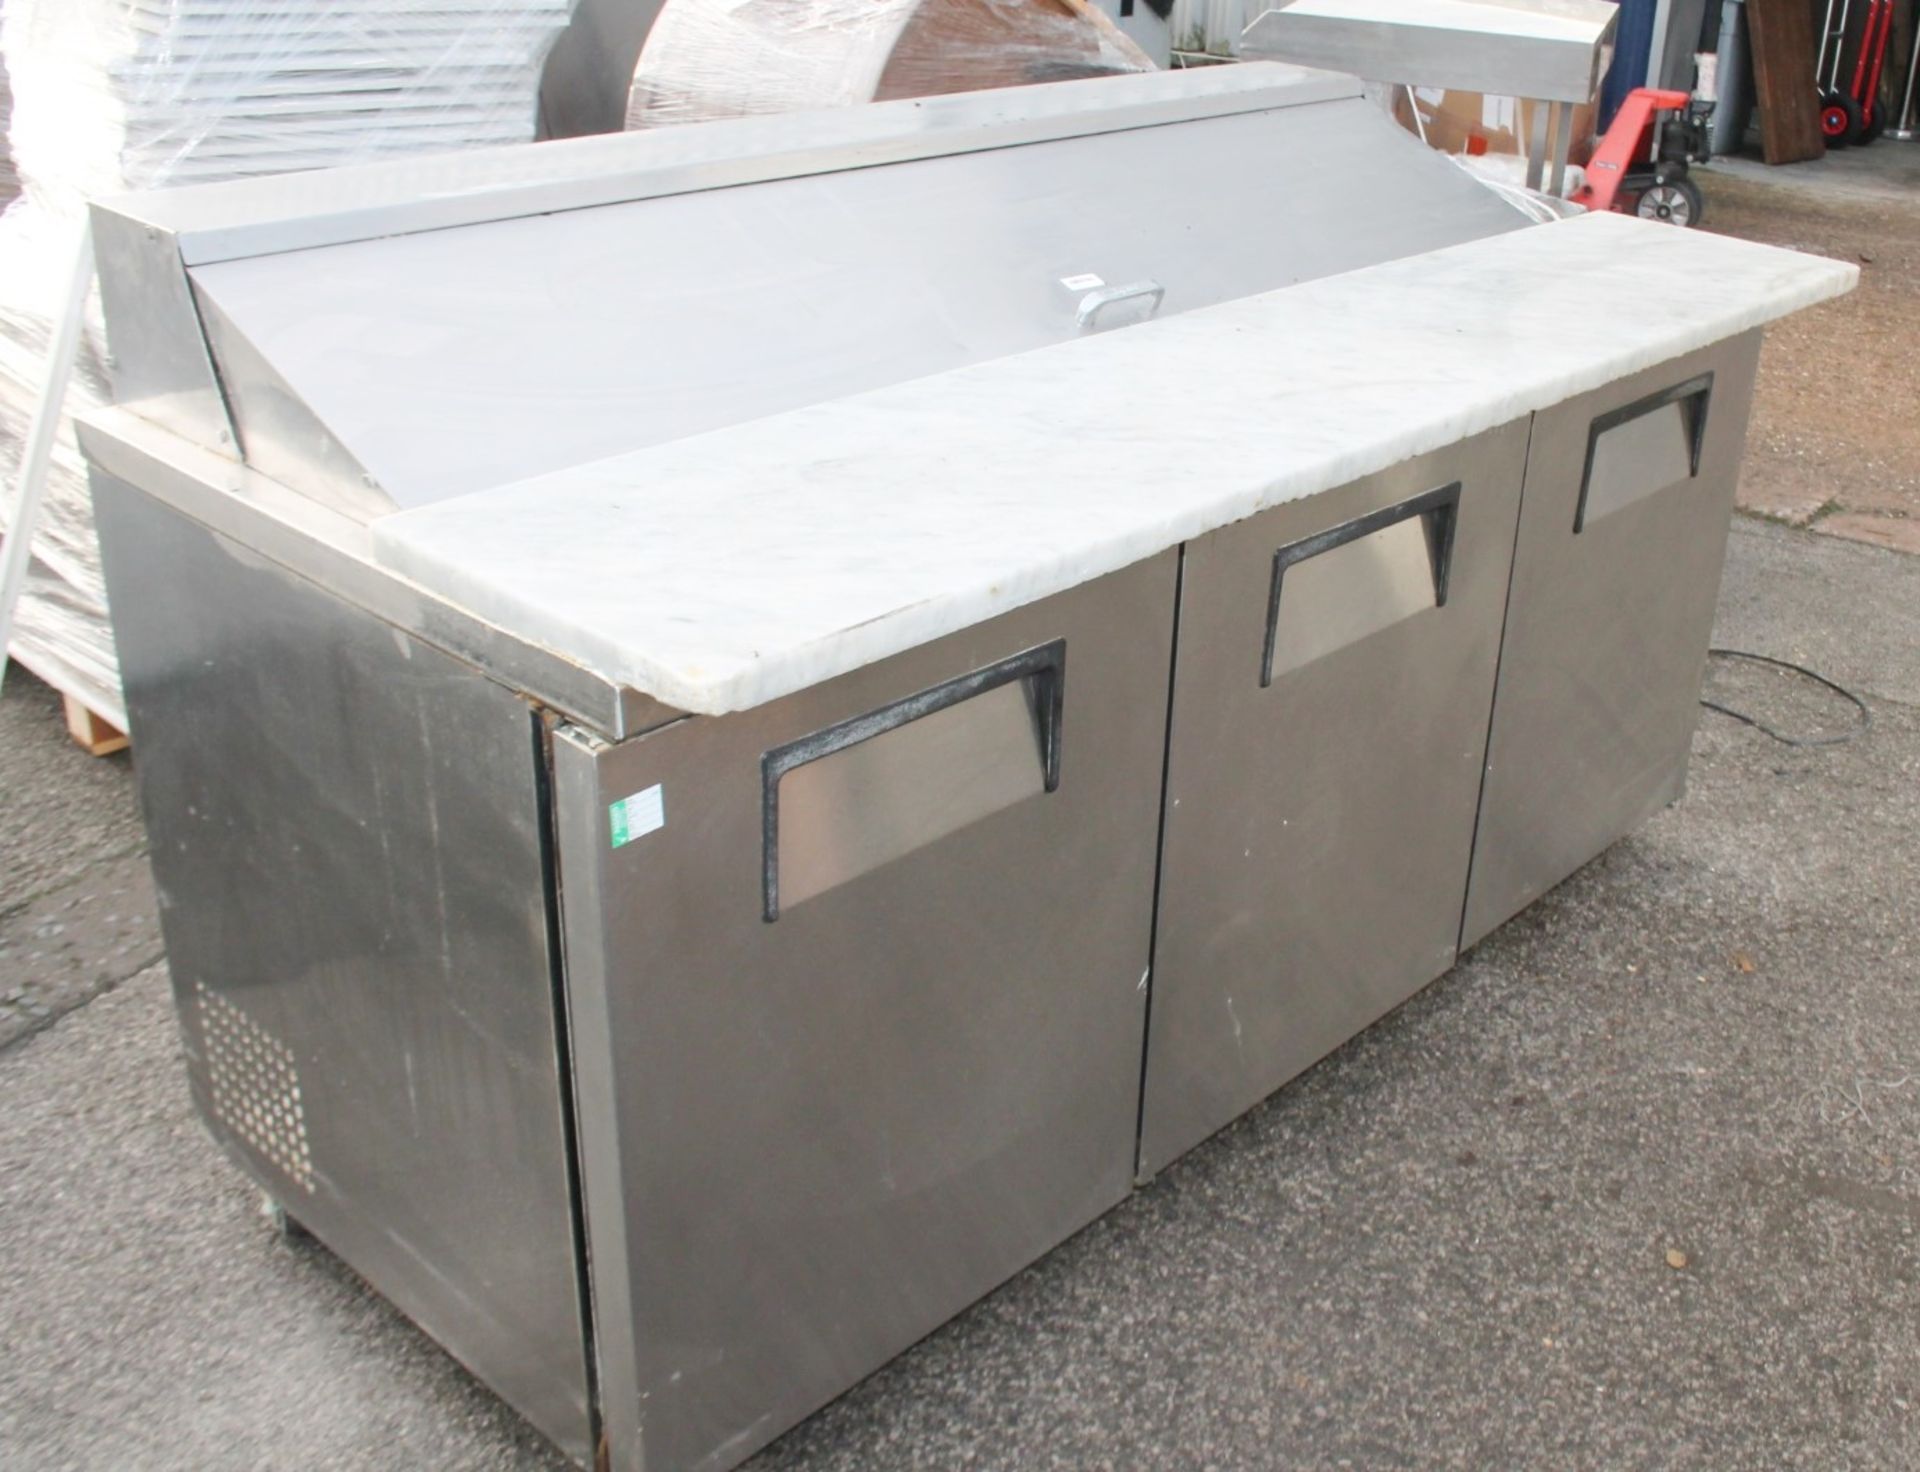 1 x Commercial 3-Door Refrigerated Counter In Stainless Steel - Ref: GEN763 WH2 - CL811 BEL - - Image 5 of 5